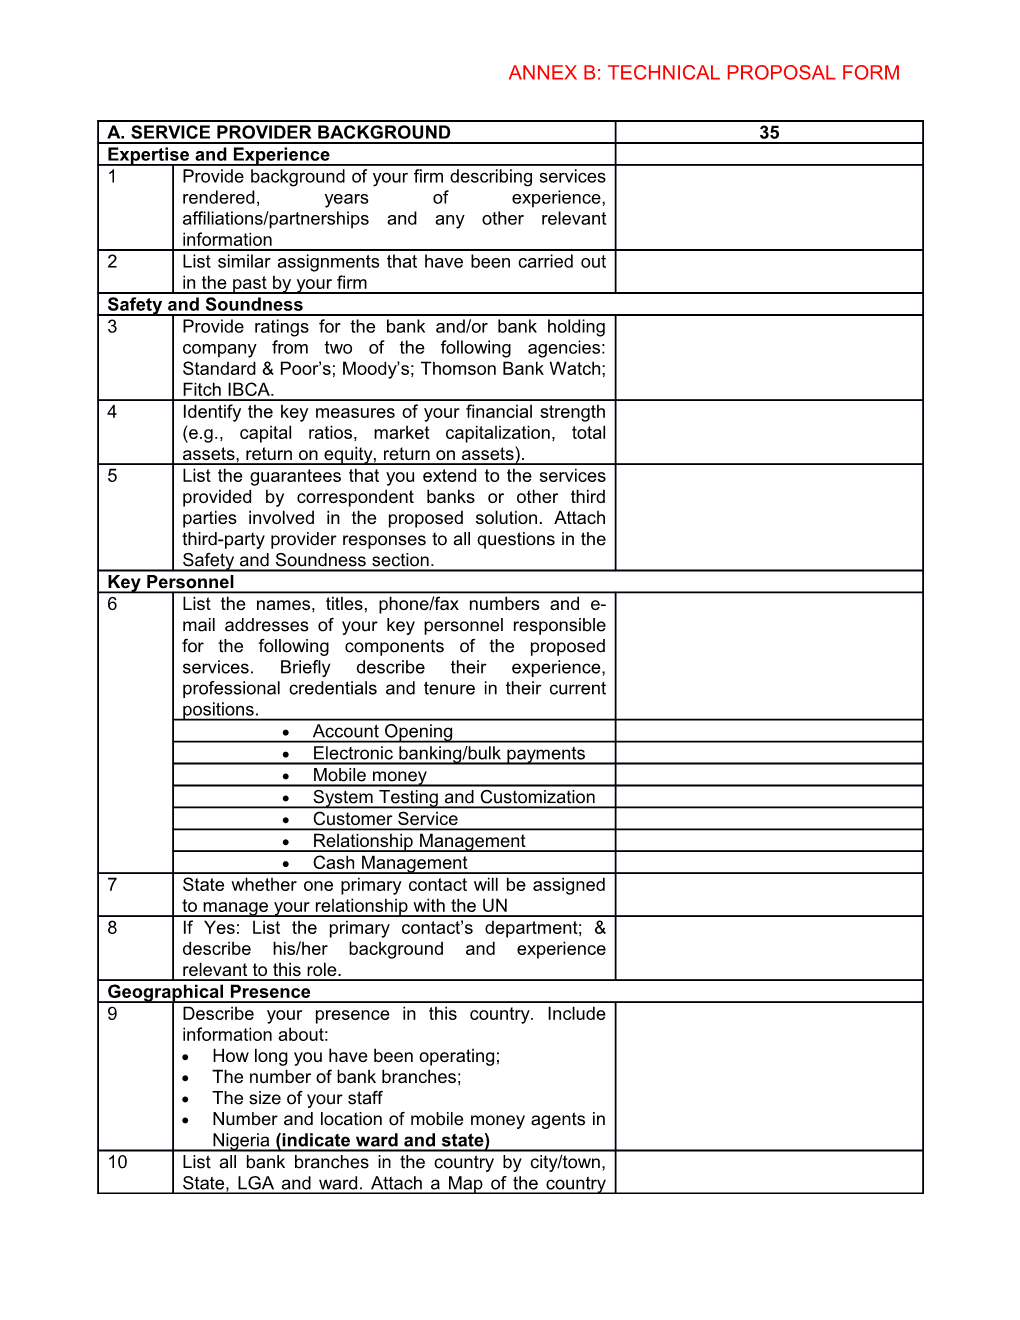 Annex B: Technical Proposal Form